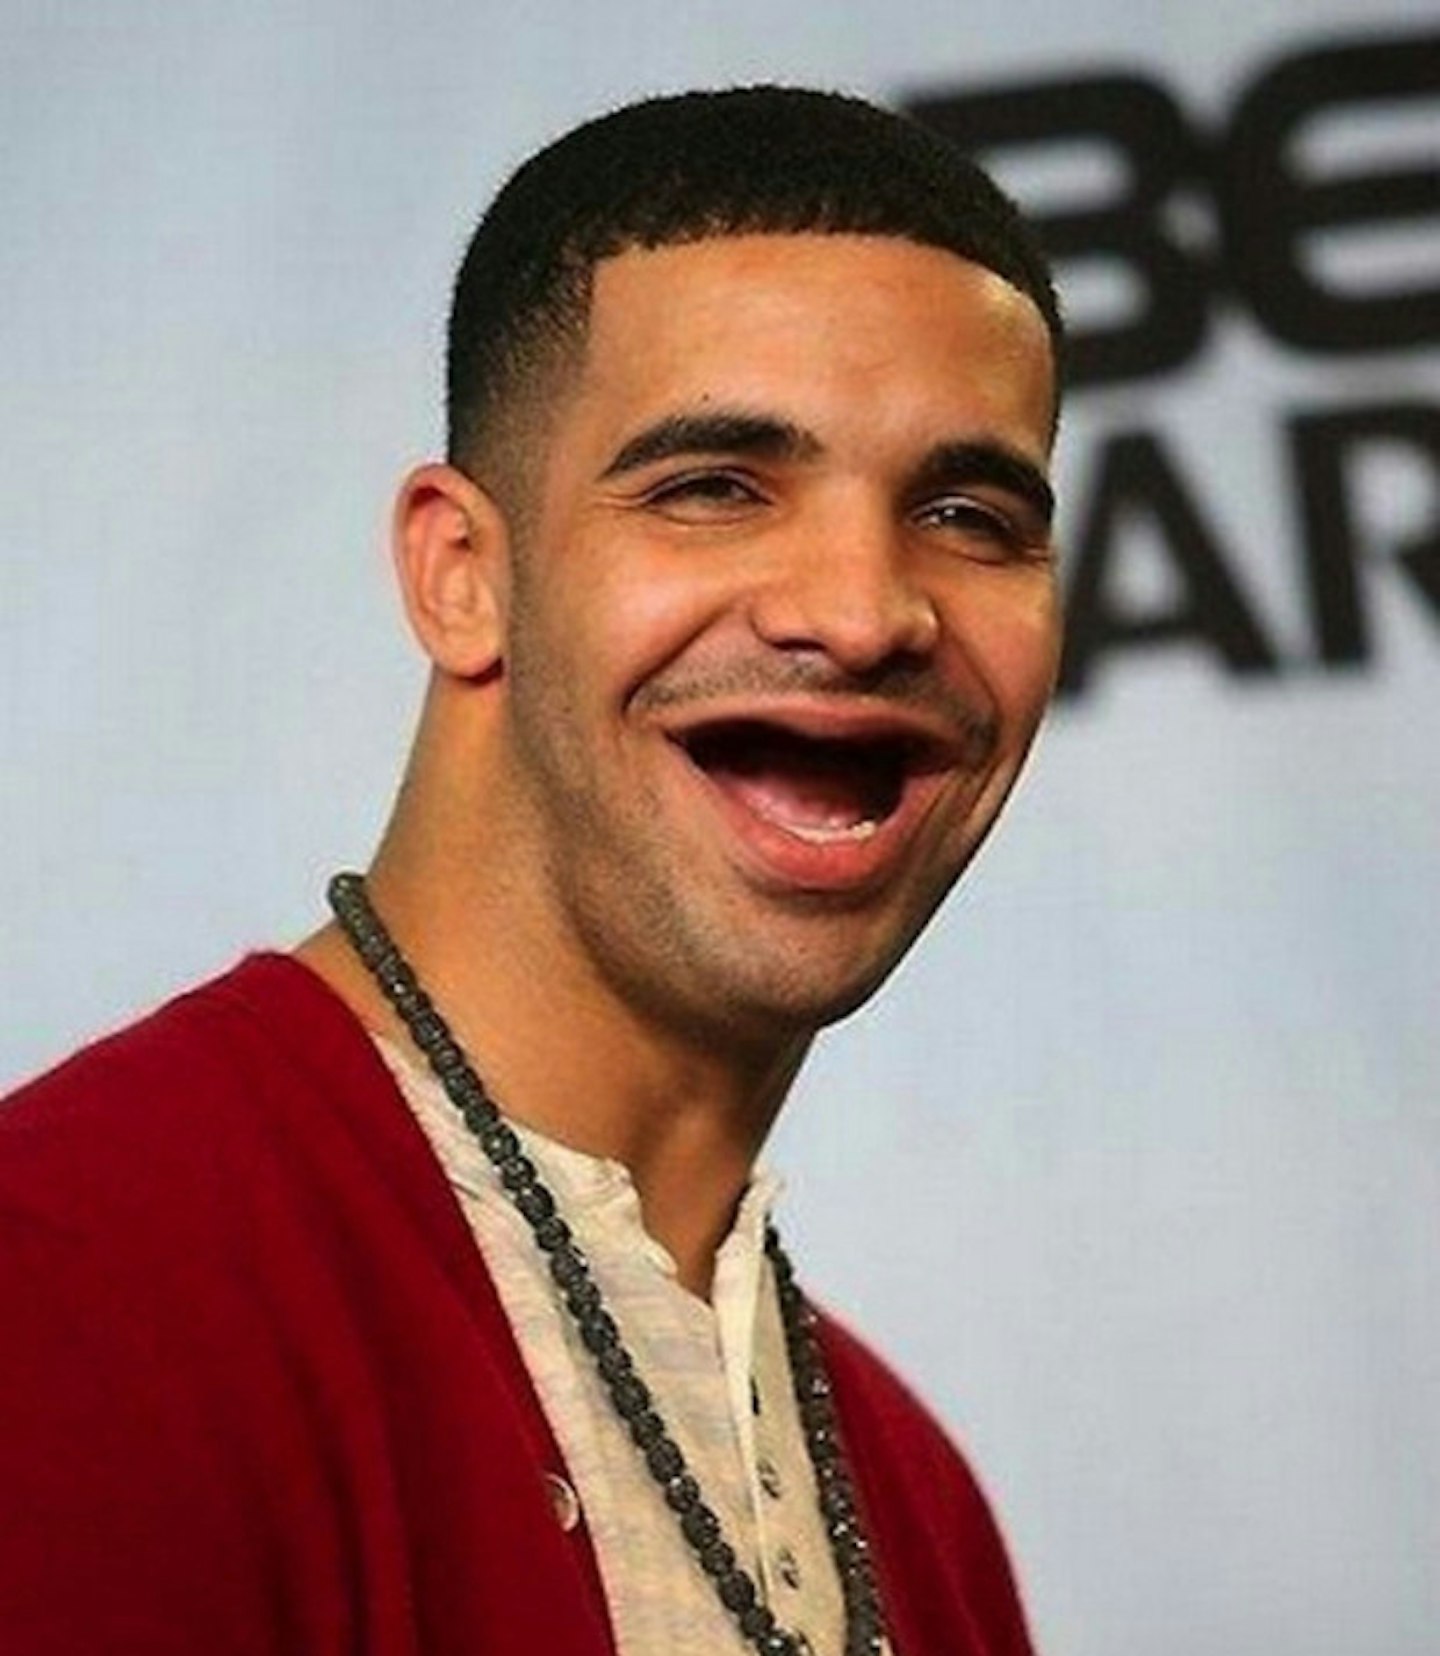 Drake with no teeth